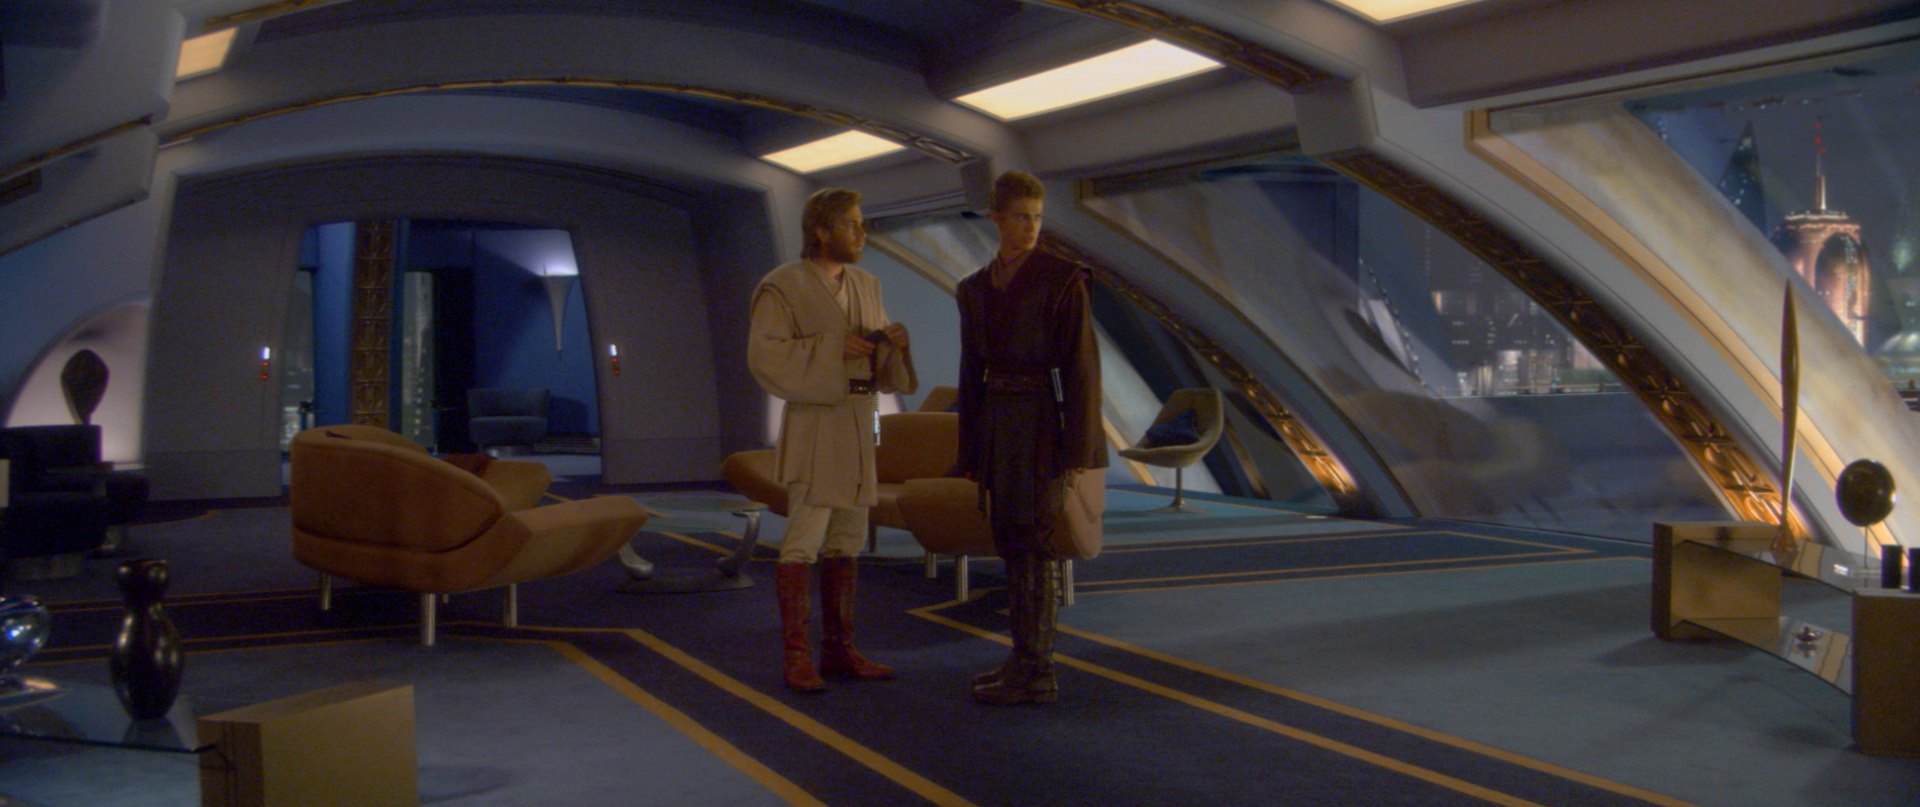 obi-wan kenobi and Anakin skywalker